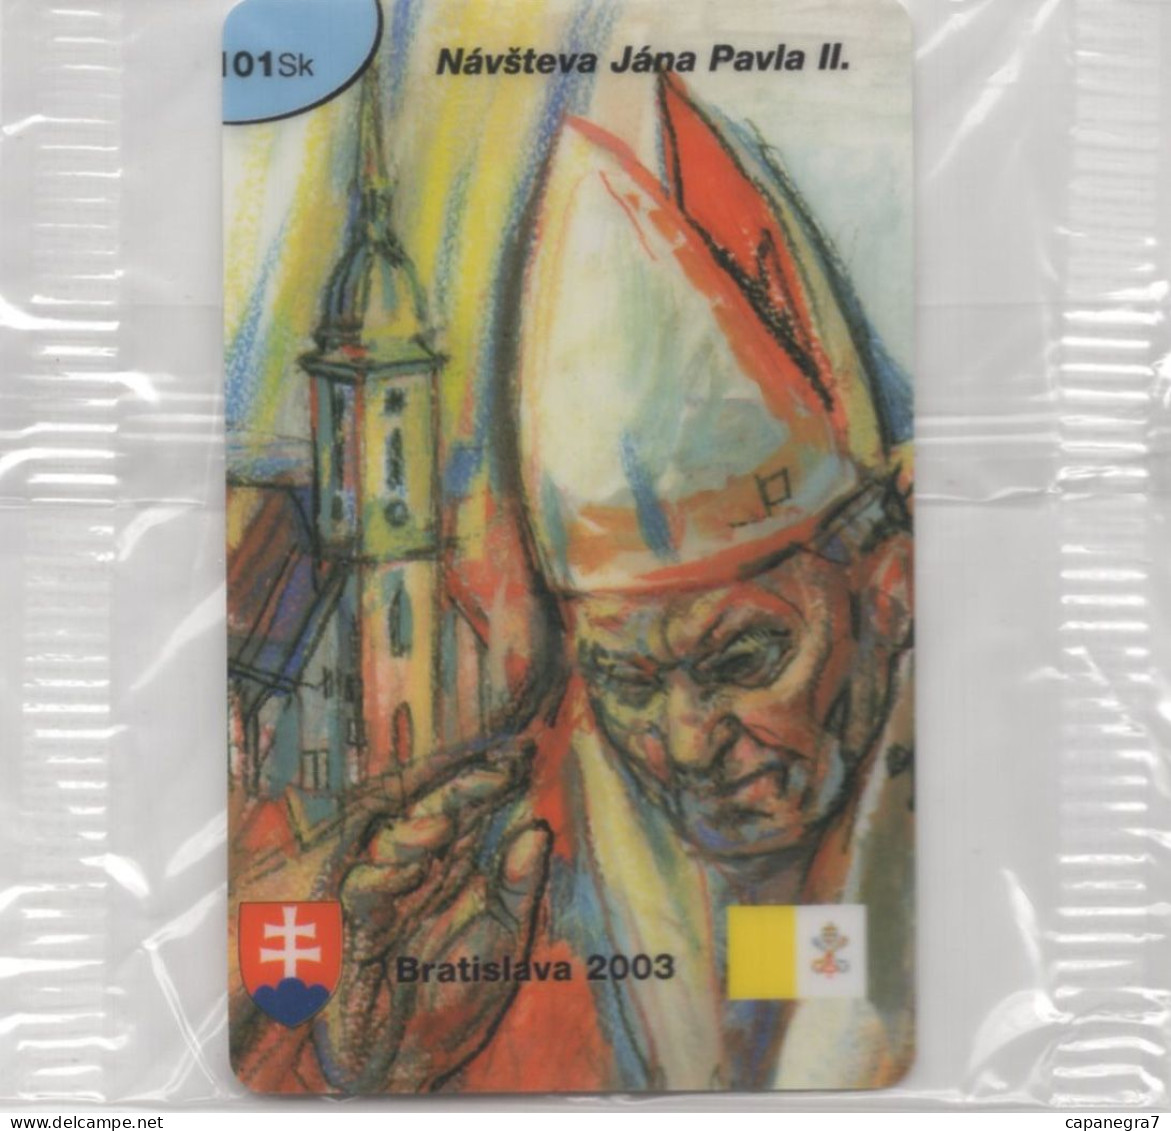 Ope John Paulu II. - Bratislava 2003, Remote Memory, Prepaid Calling Card, 101 Sk., 1.250 Pc., GlobalIPhone, Slovakia, M - Slovakia